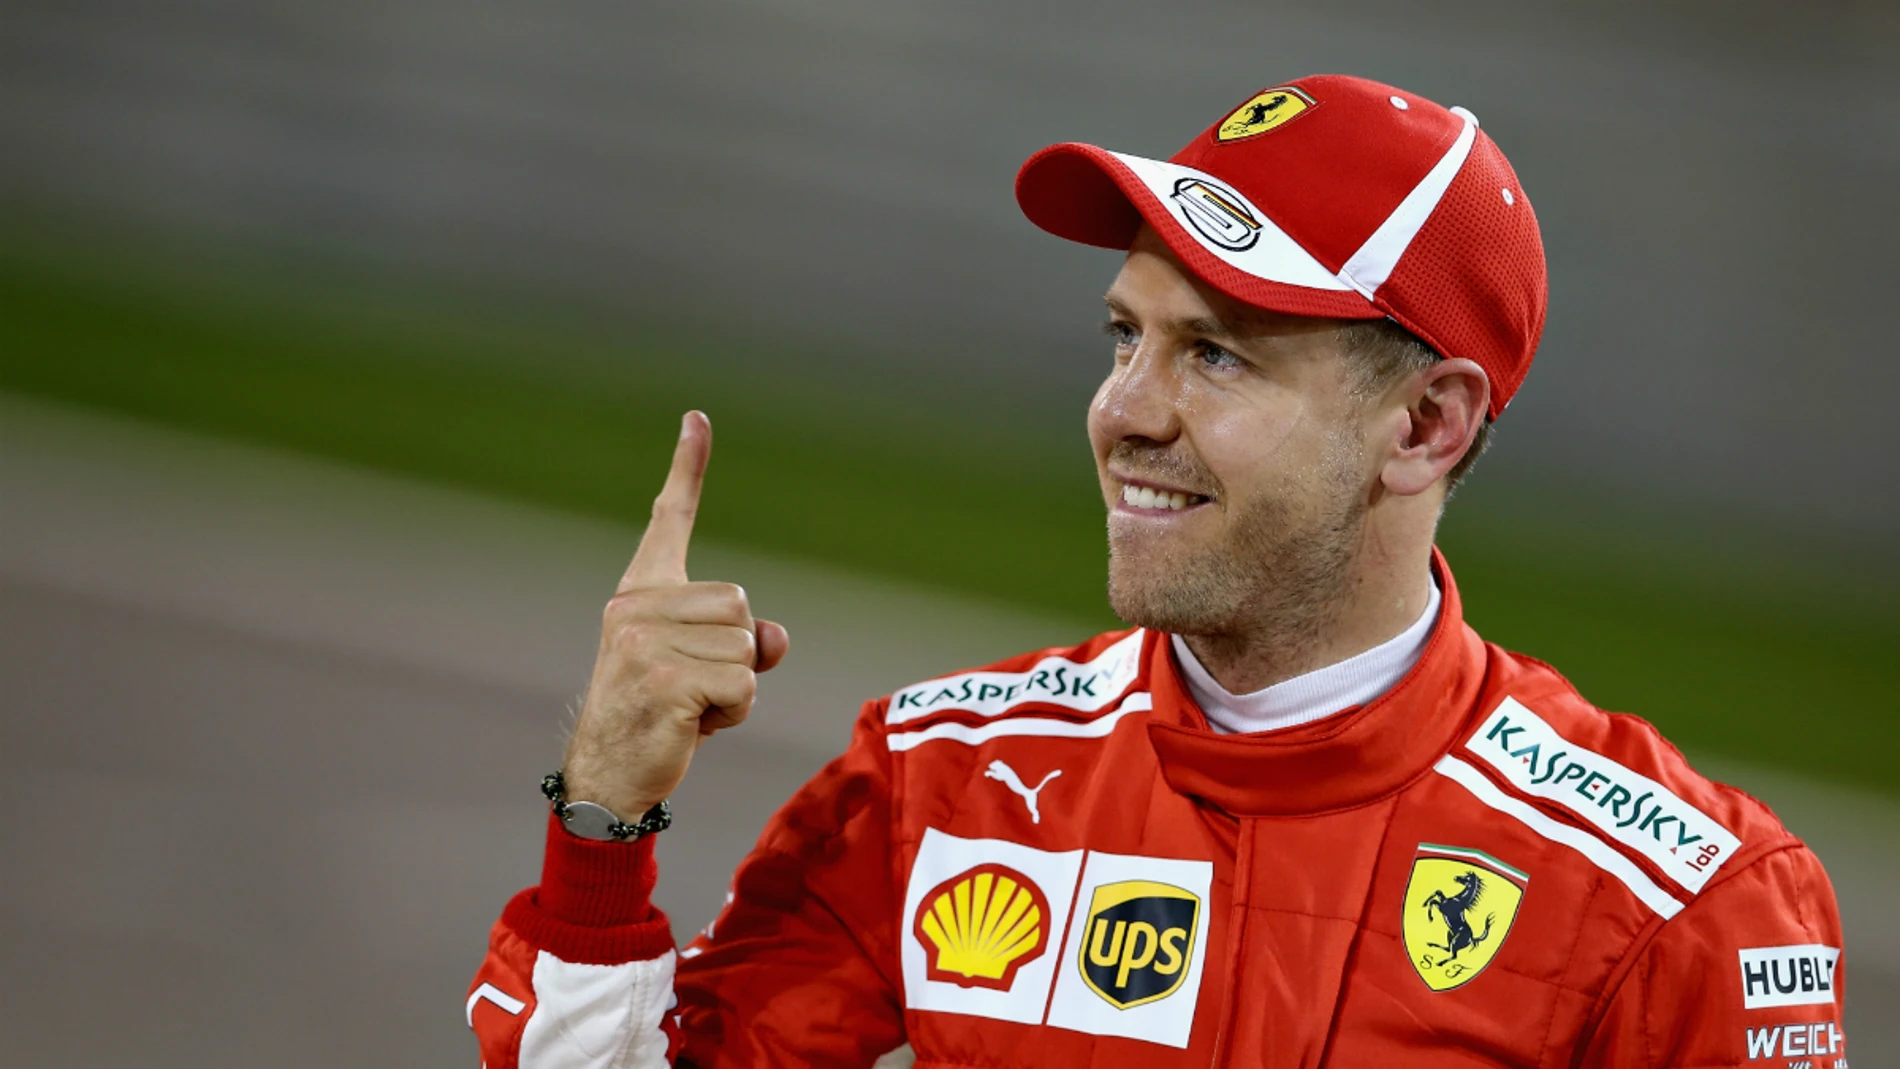 Vettel muestra su dedo